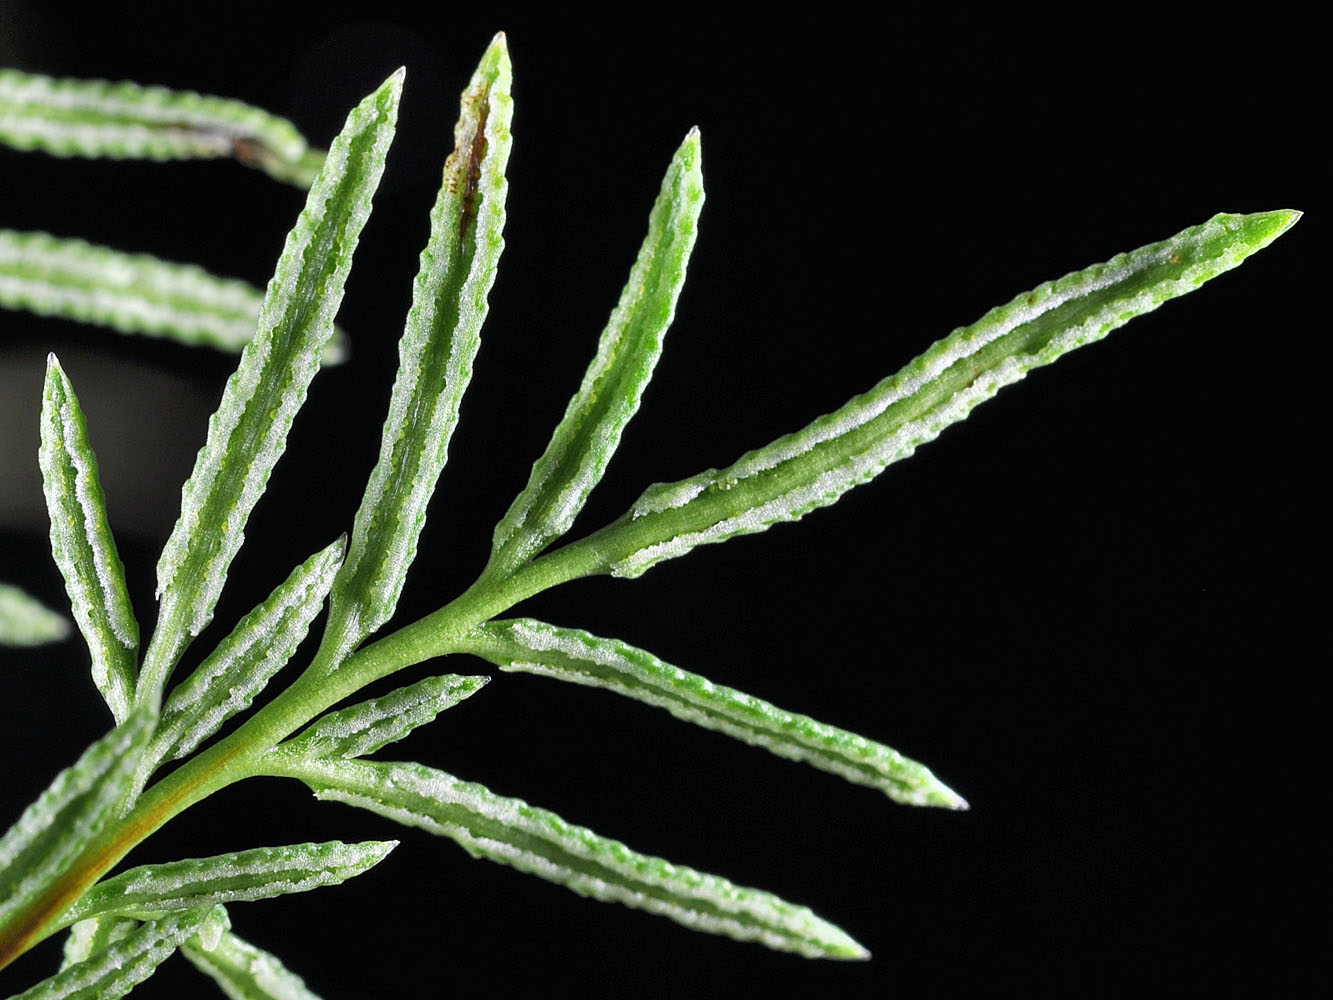 Flora of Eastern Washington Image: Aspidotis densa